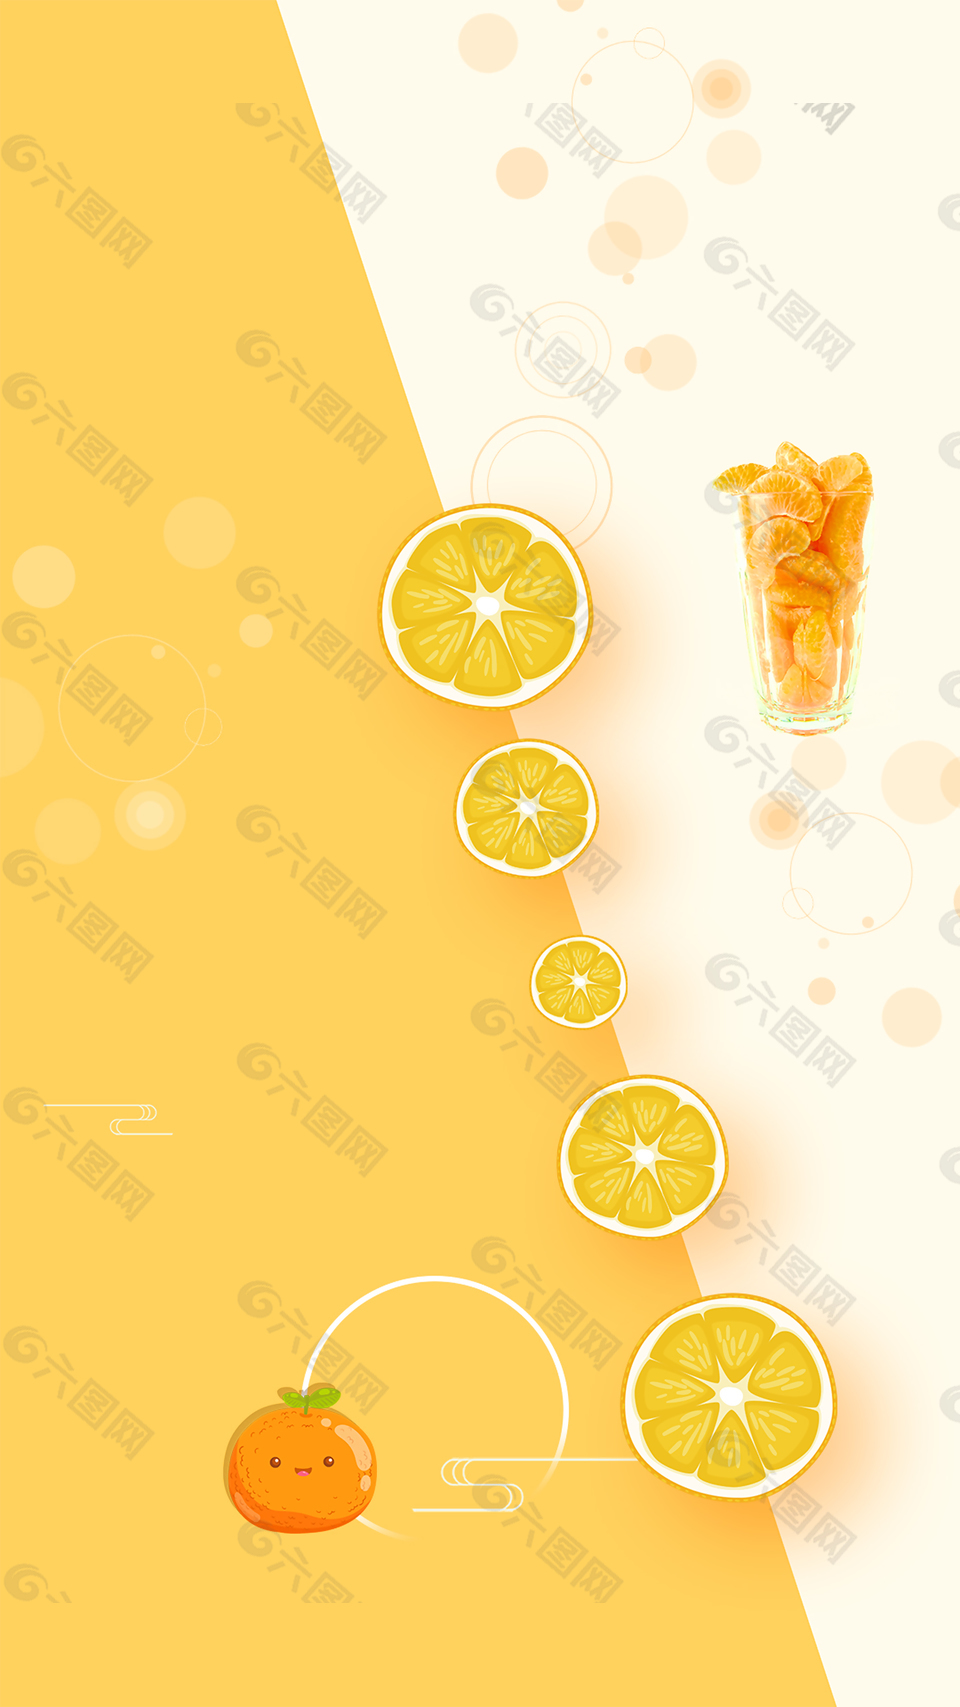 水果超市橙汁橙子背景